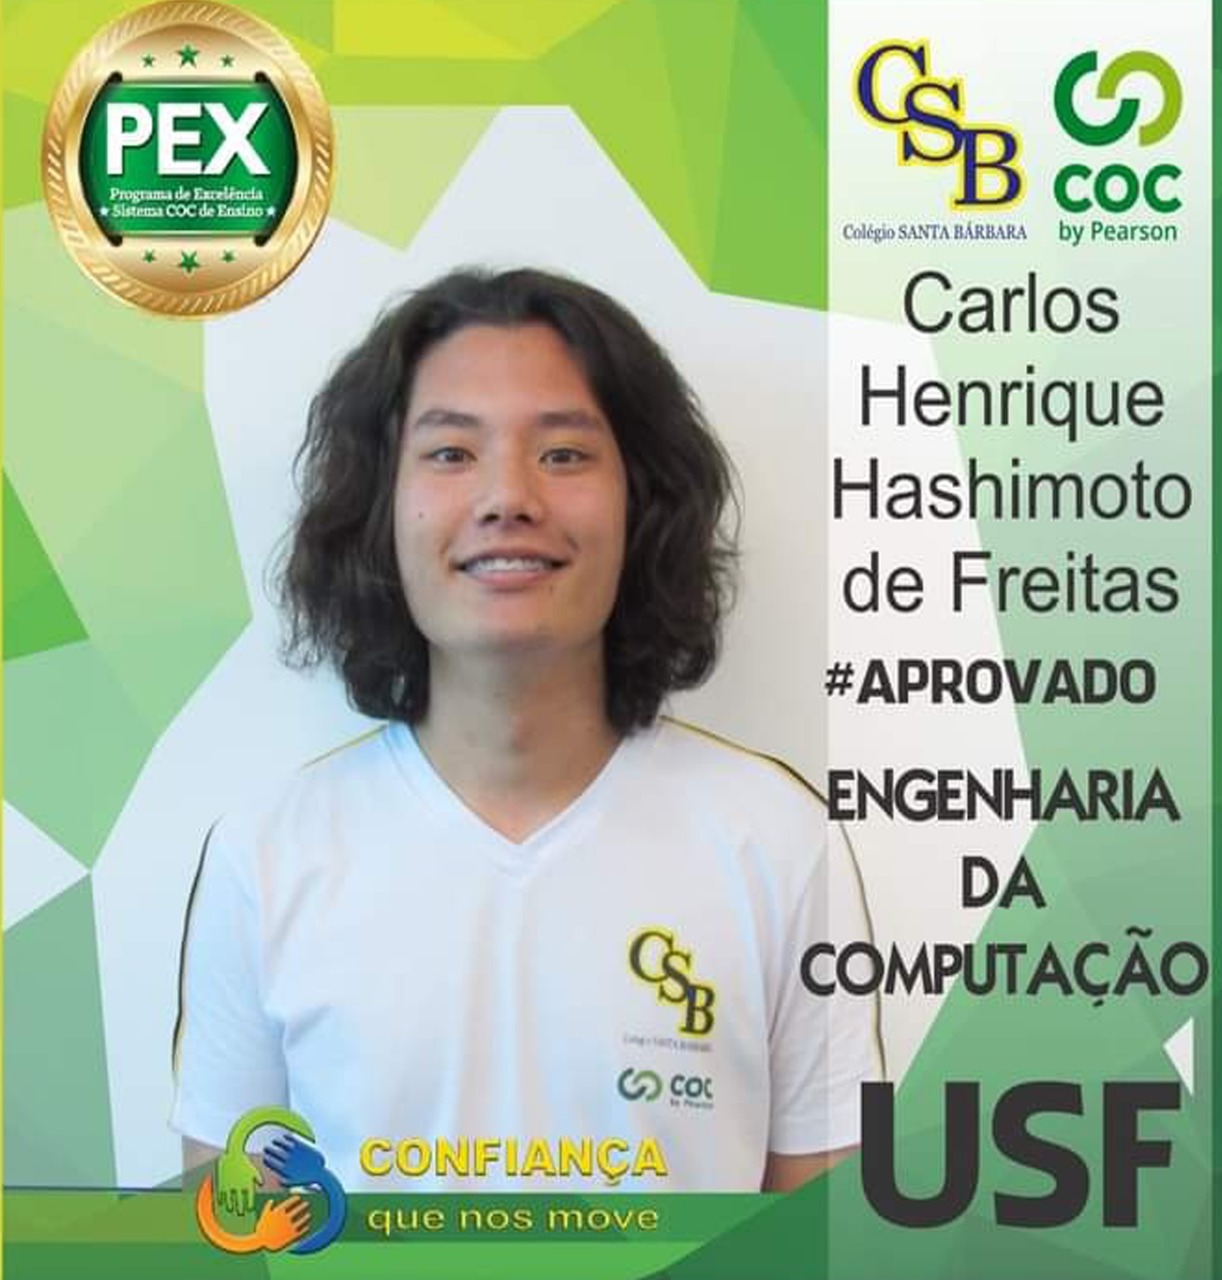 Carlos Henrique Hashimito de Freitas